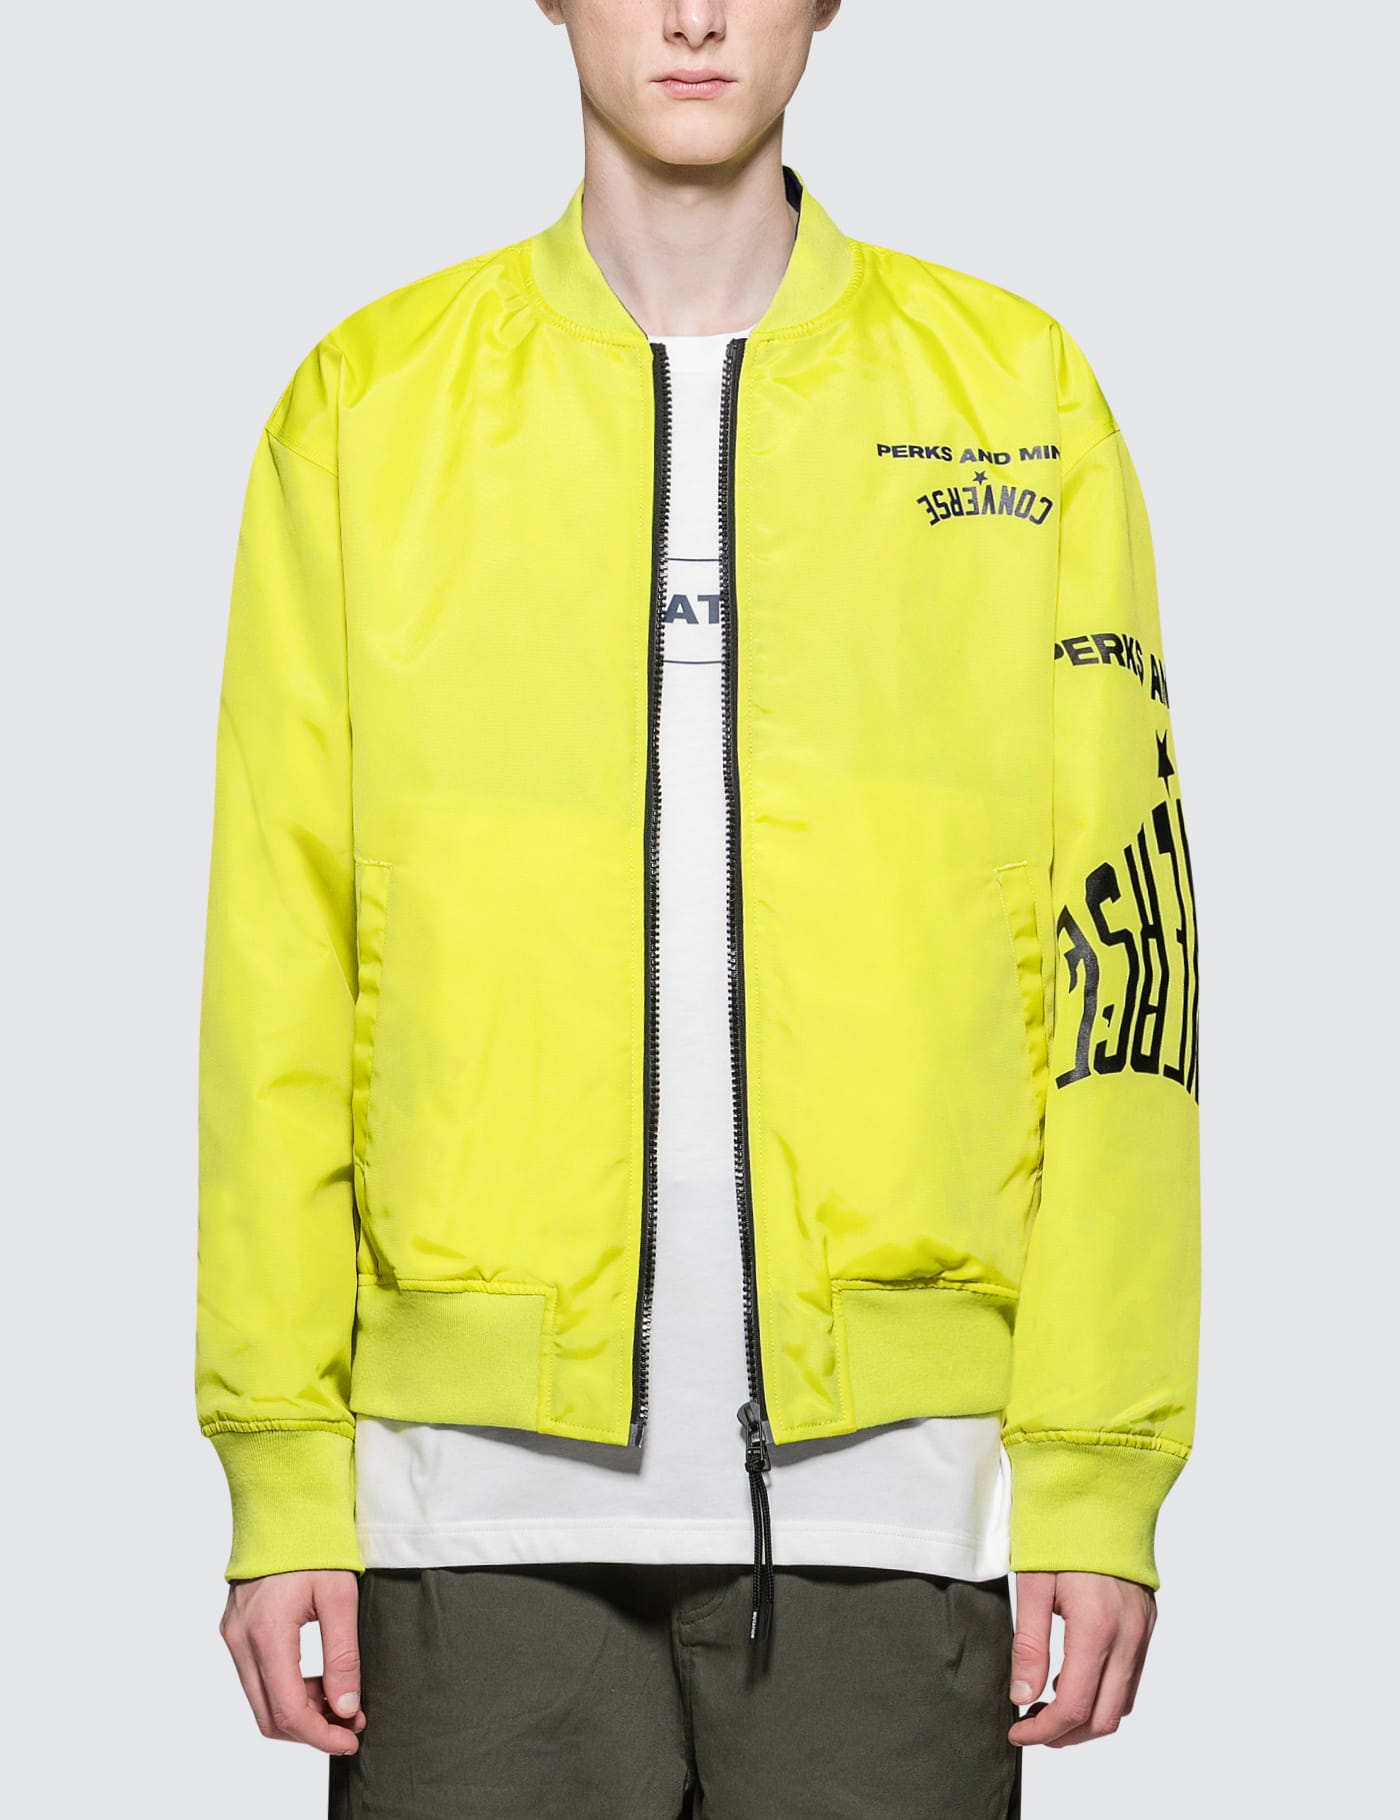 converse yellow jacket